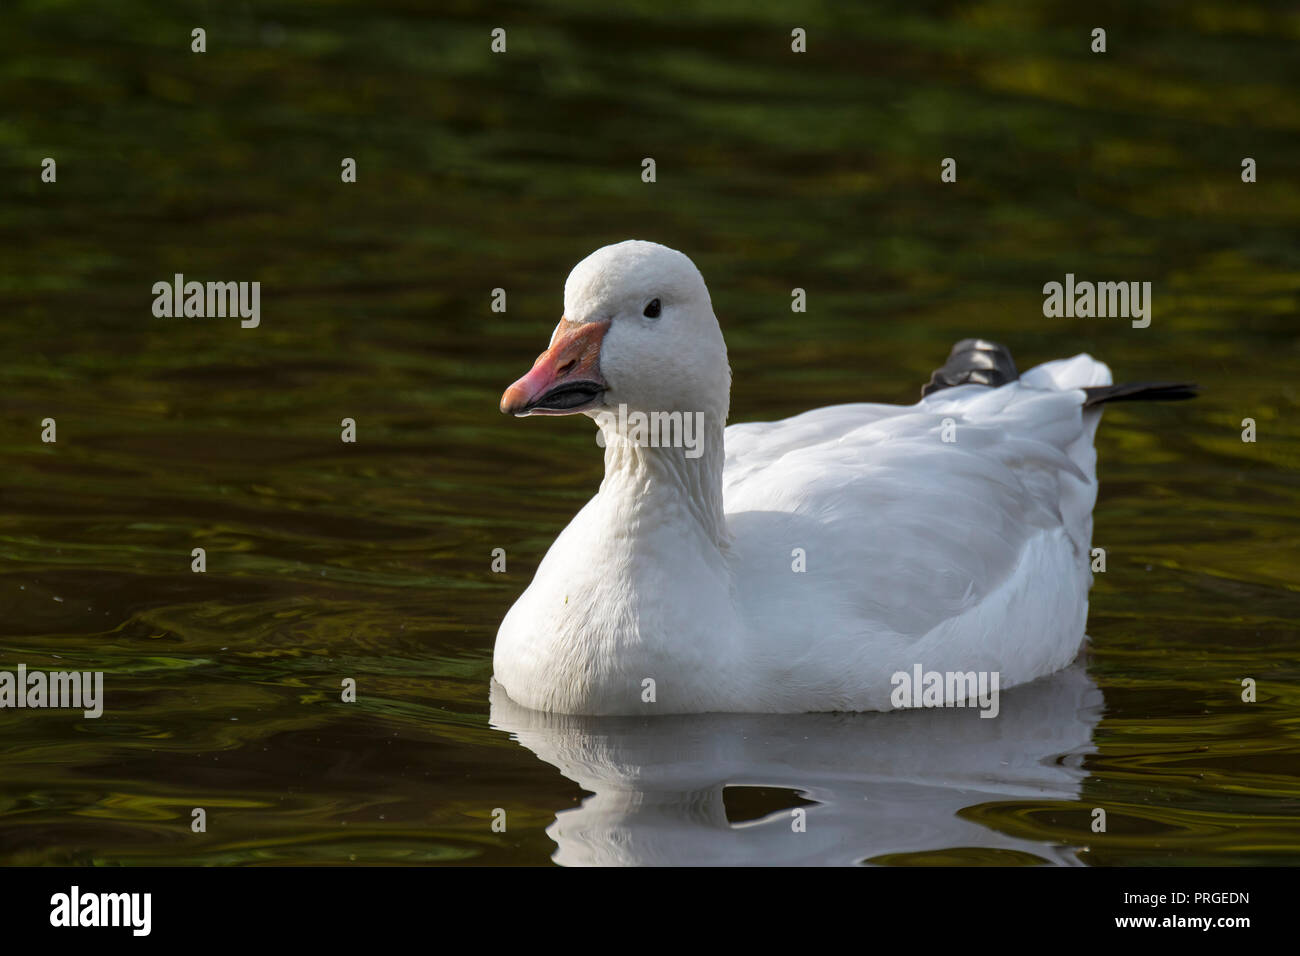 Snow goose (Anser caerulescens) swimming in lake Stock Photo